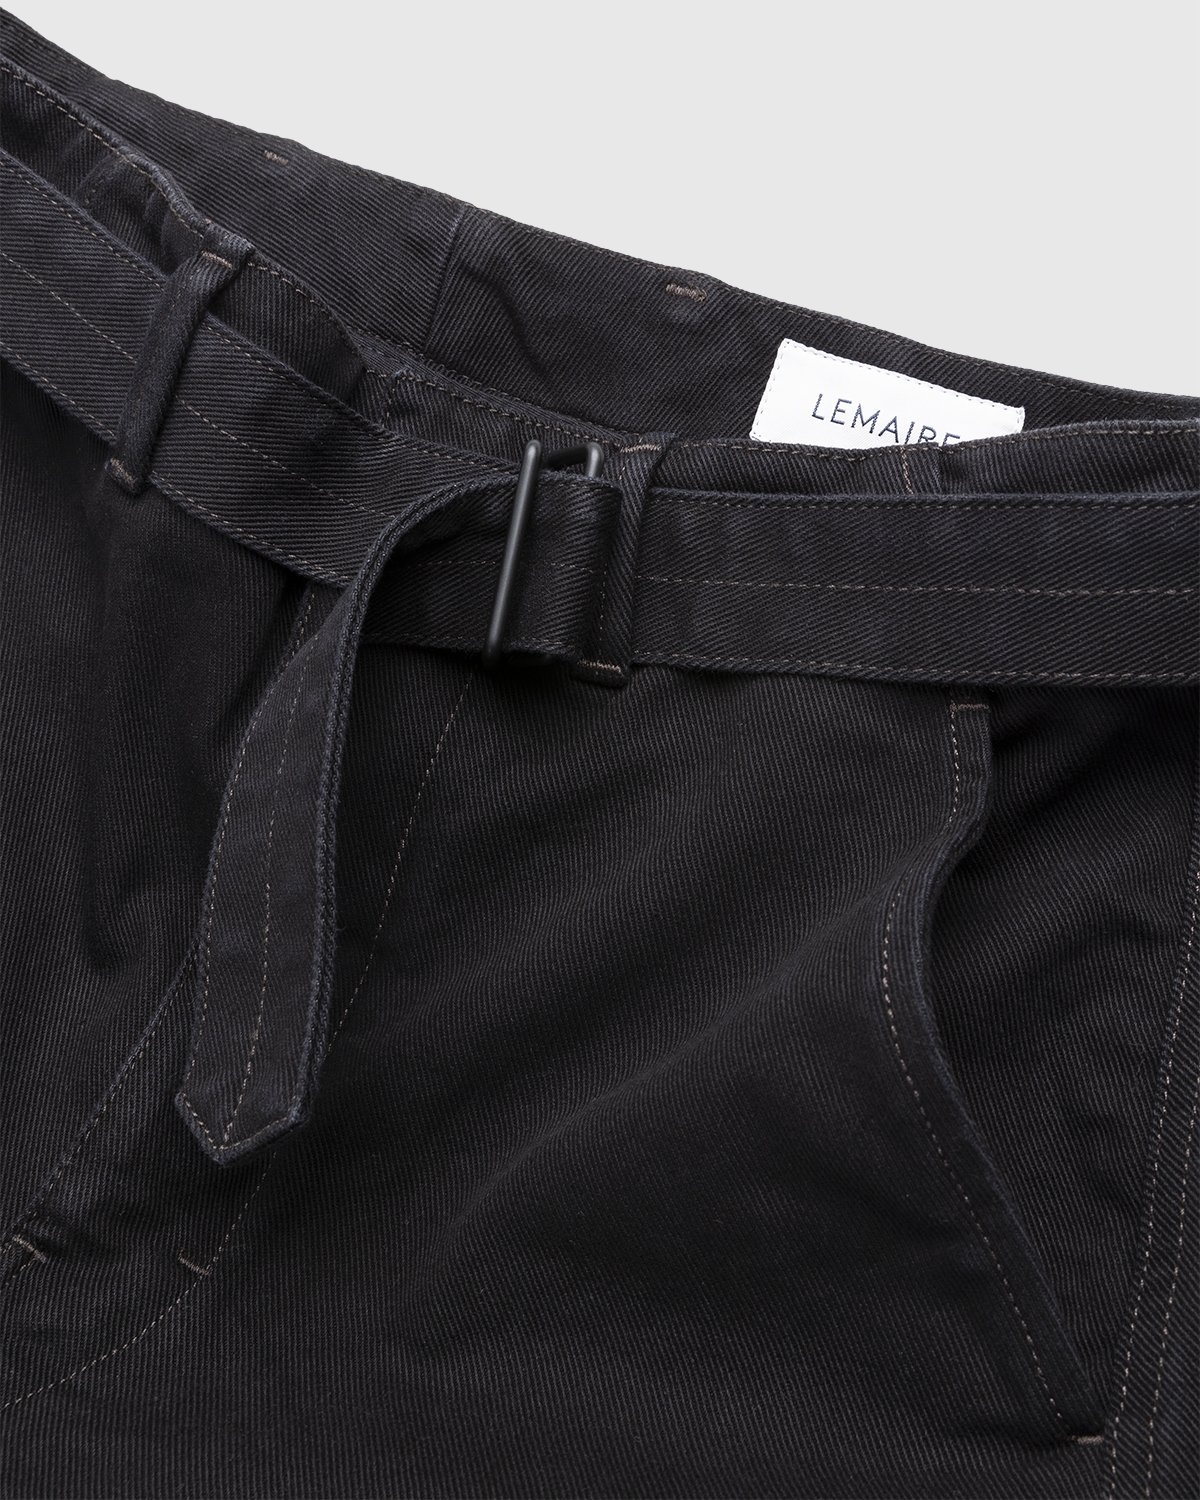 Lemaire – Rinsed Denim Twisted Pants Black - Pants - Black - Image 4